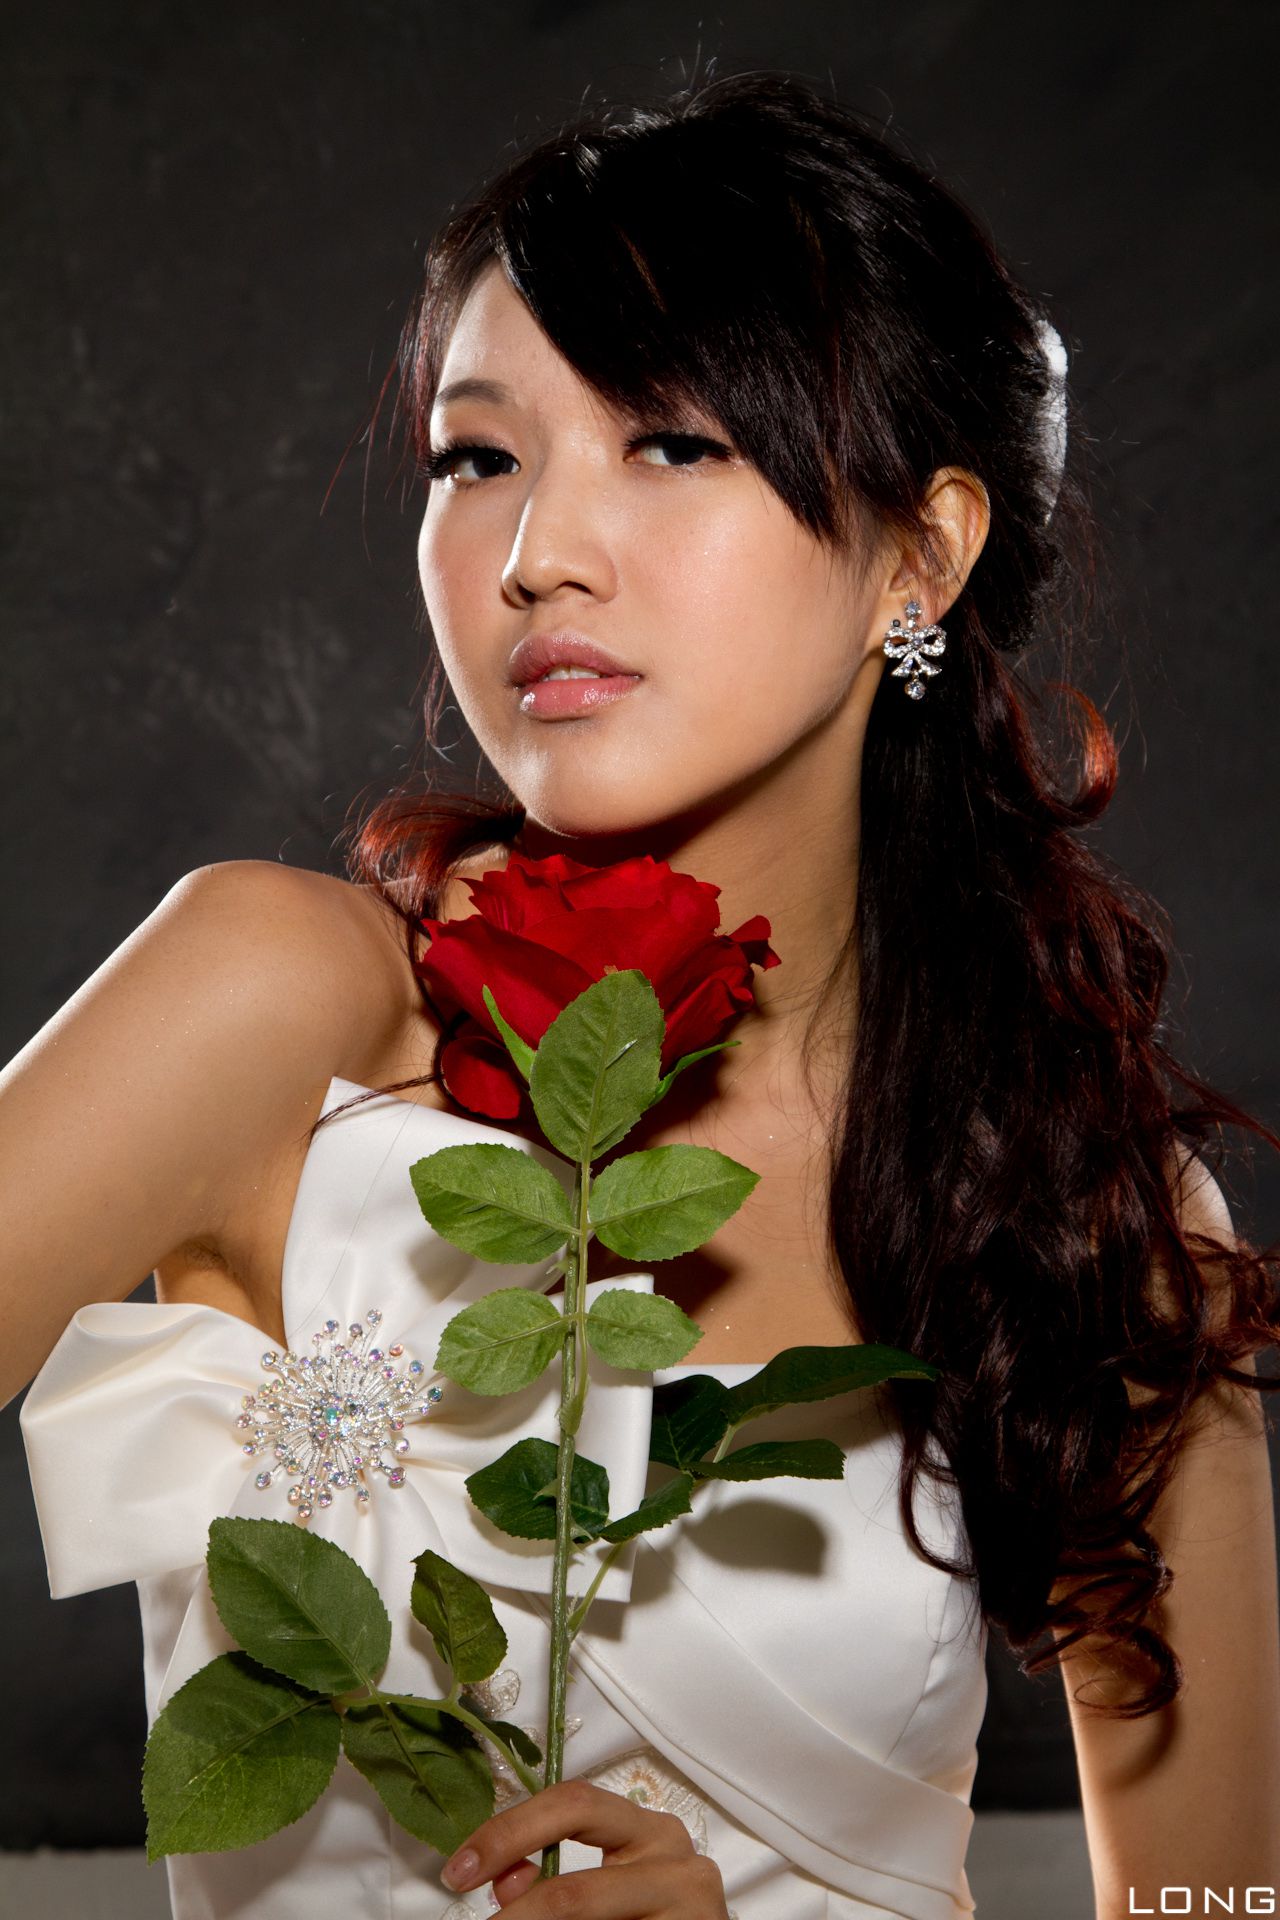 Taiwanese beauty model Chen Yuting Jill “Wedding Die” Photo Collection